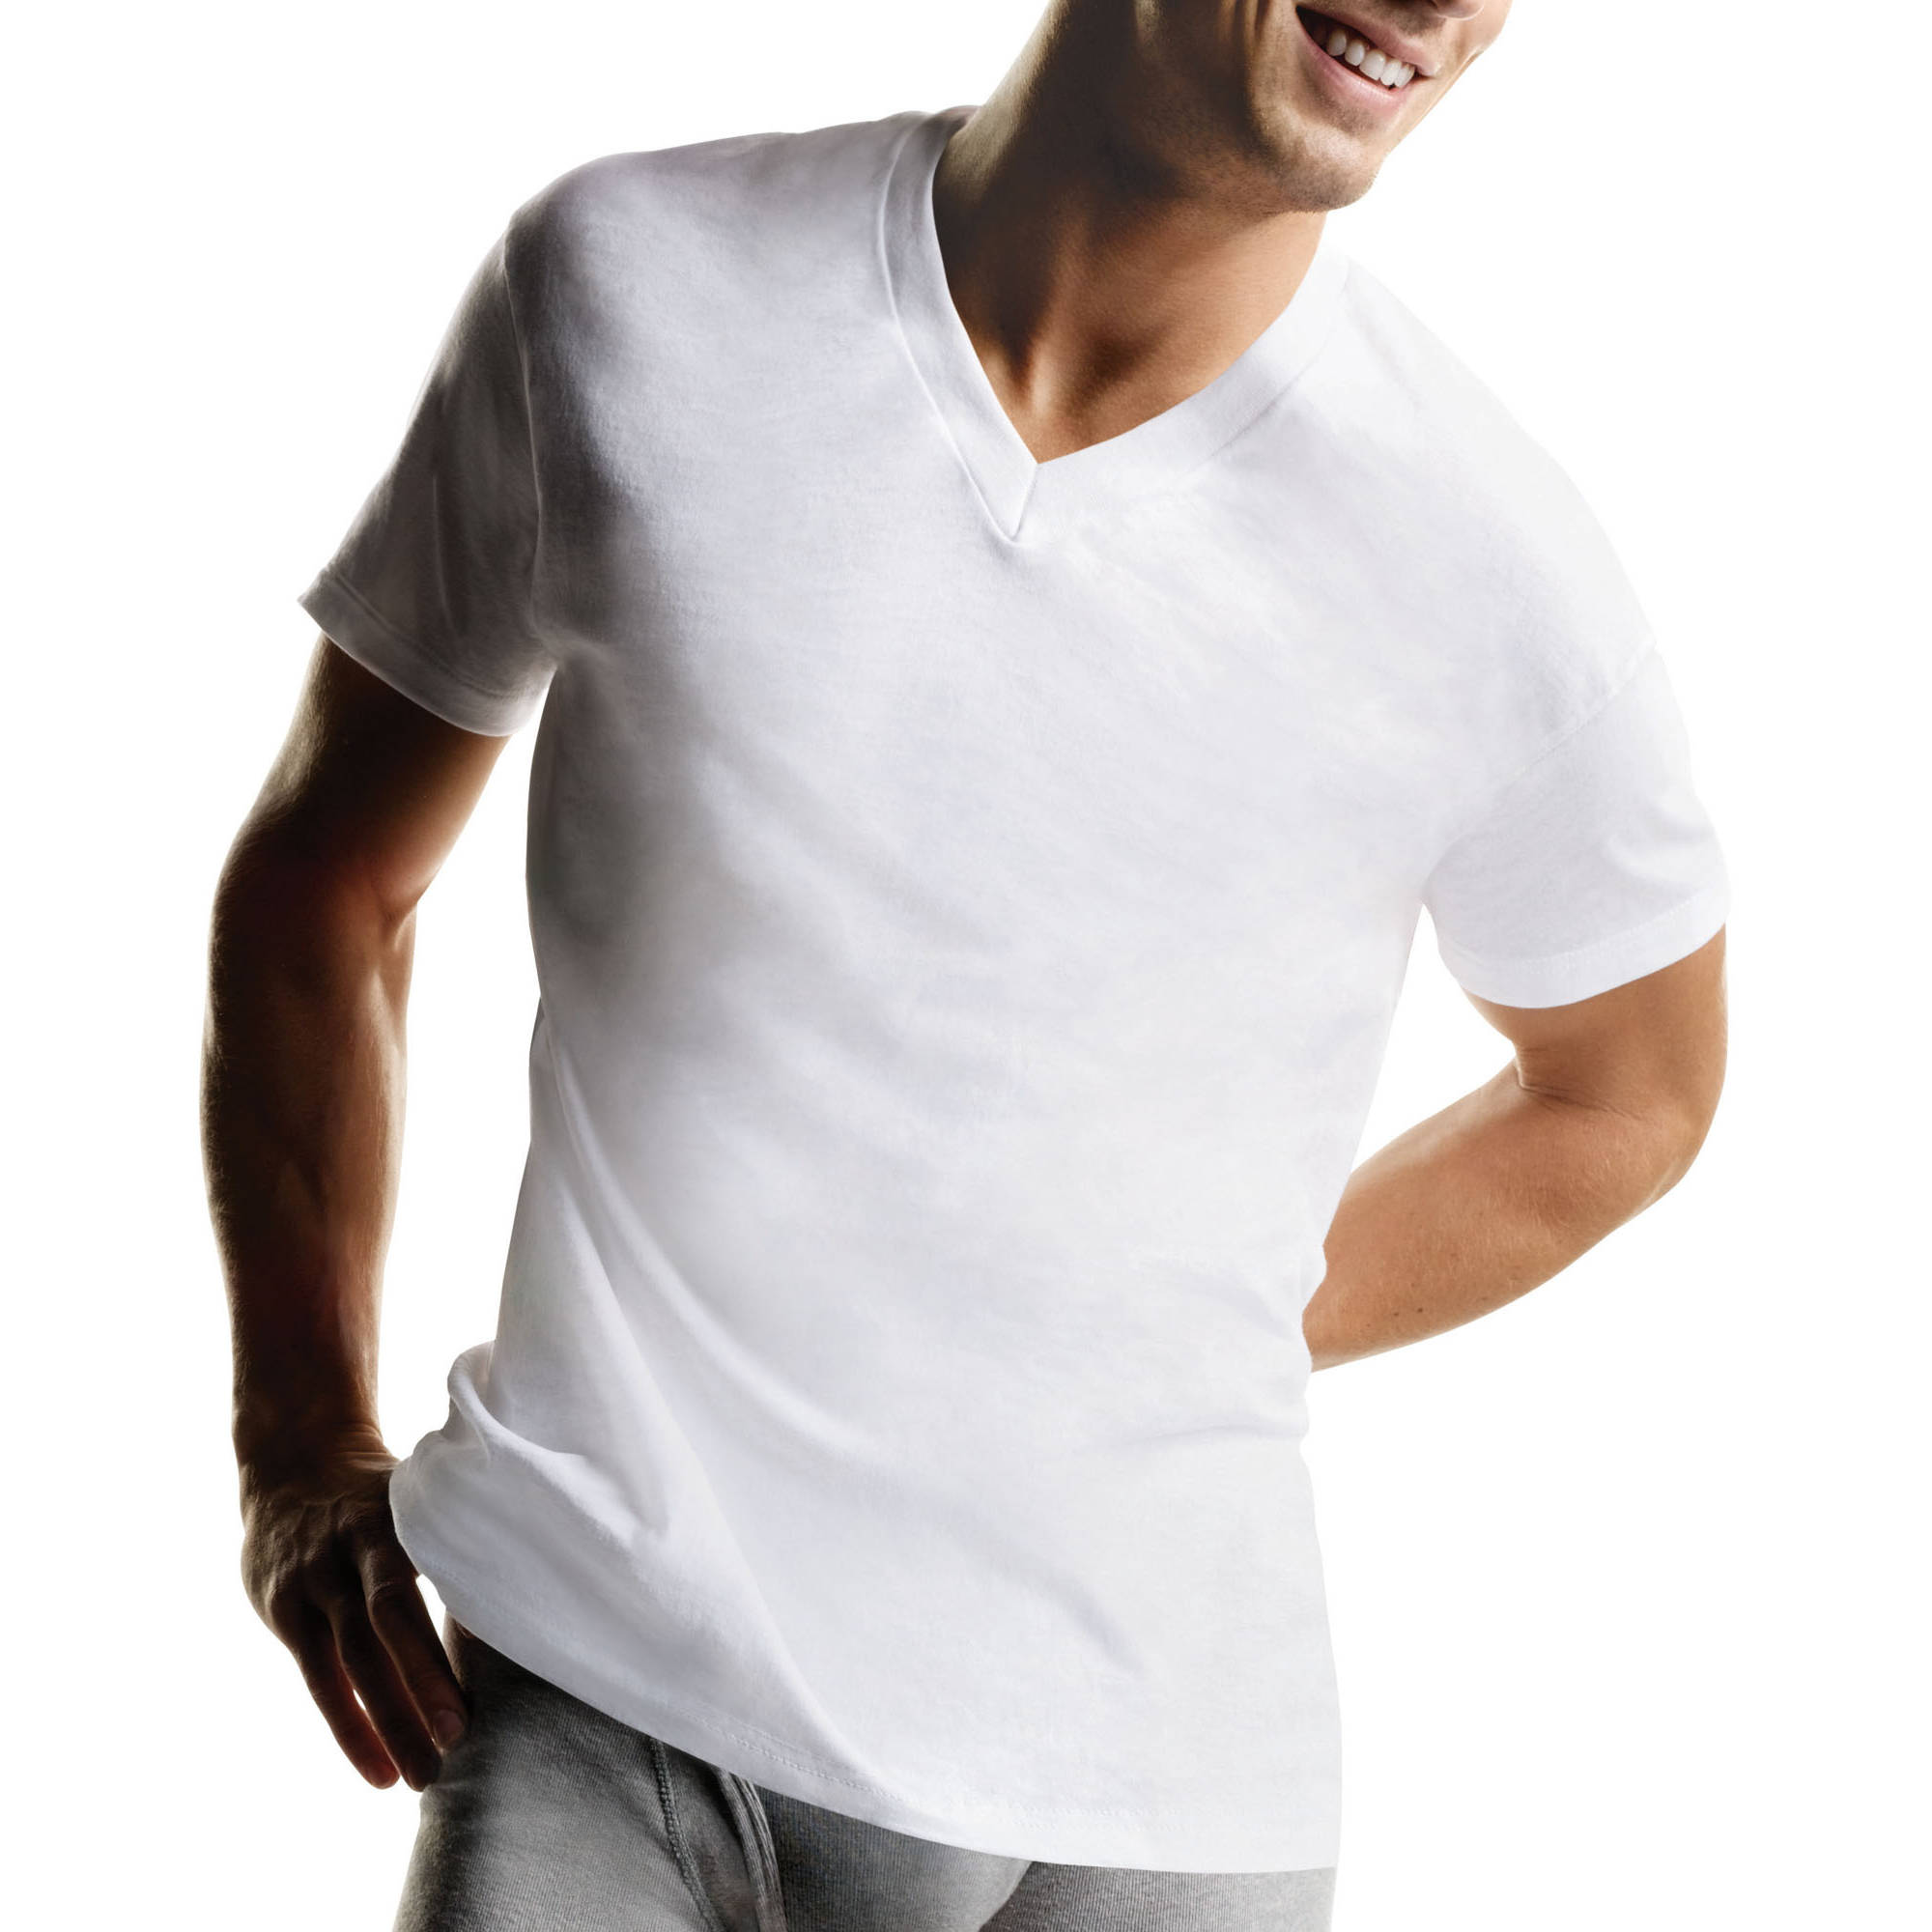 Hanes Men's Fresh IQ White V-Neck T-Shirt 6+1 Free Bonus Pack - image 2 of 6